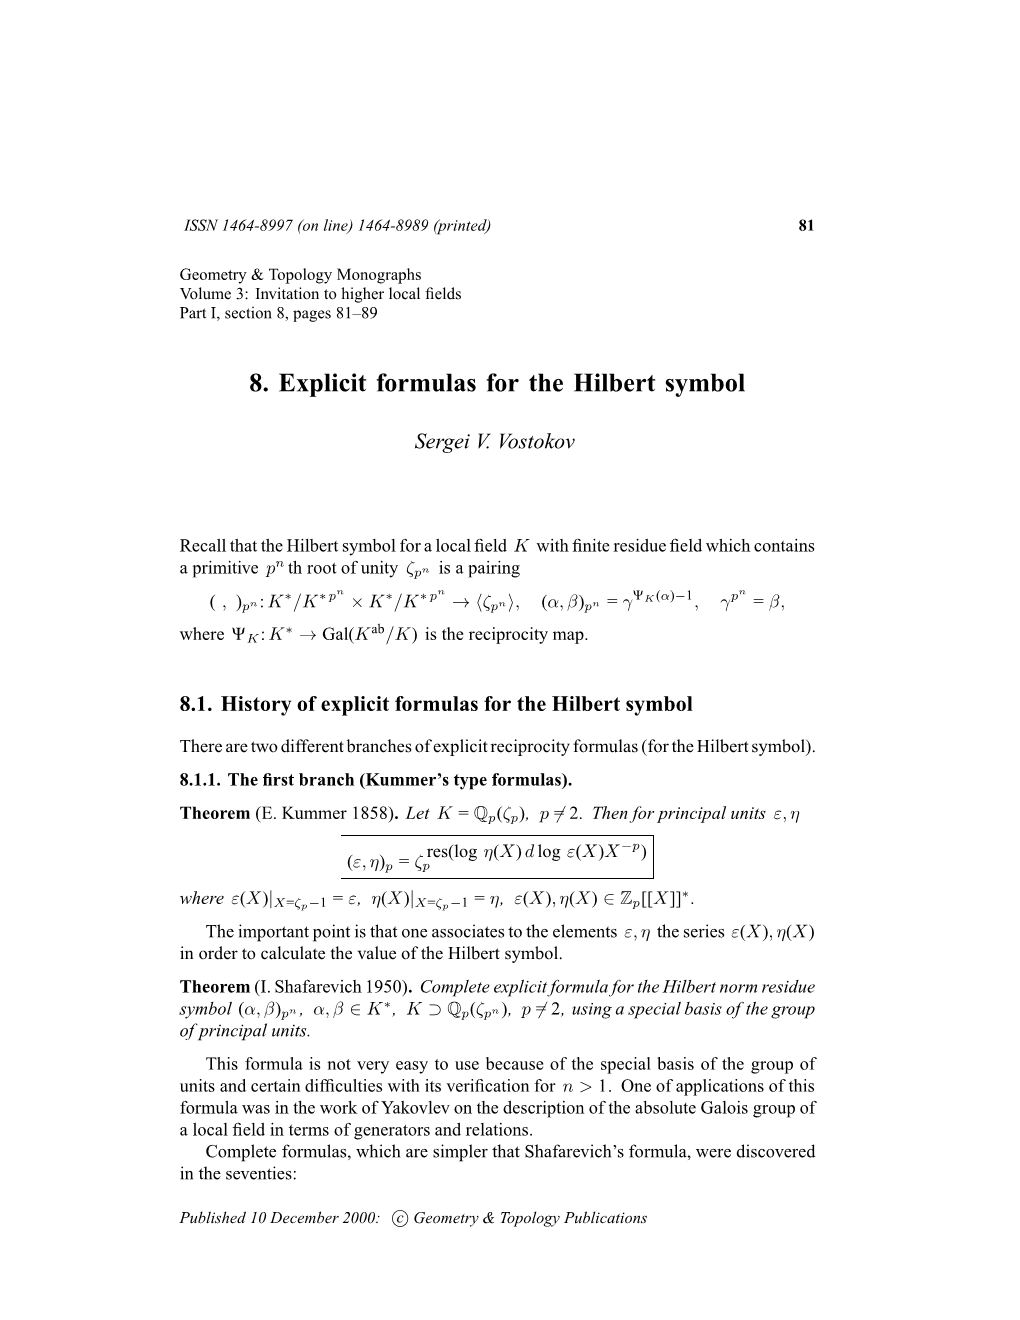 8. Explicit Formulas for the Hilbert Symbol